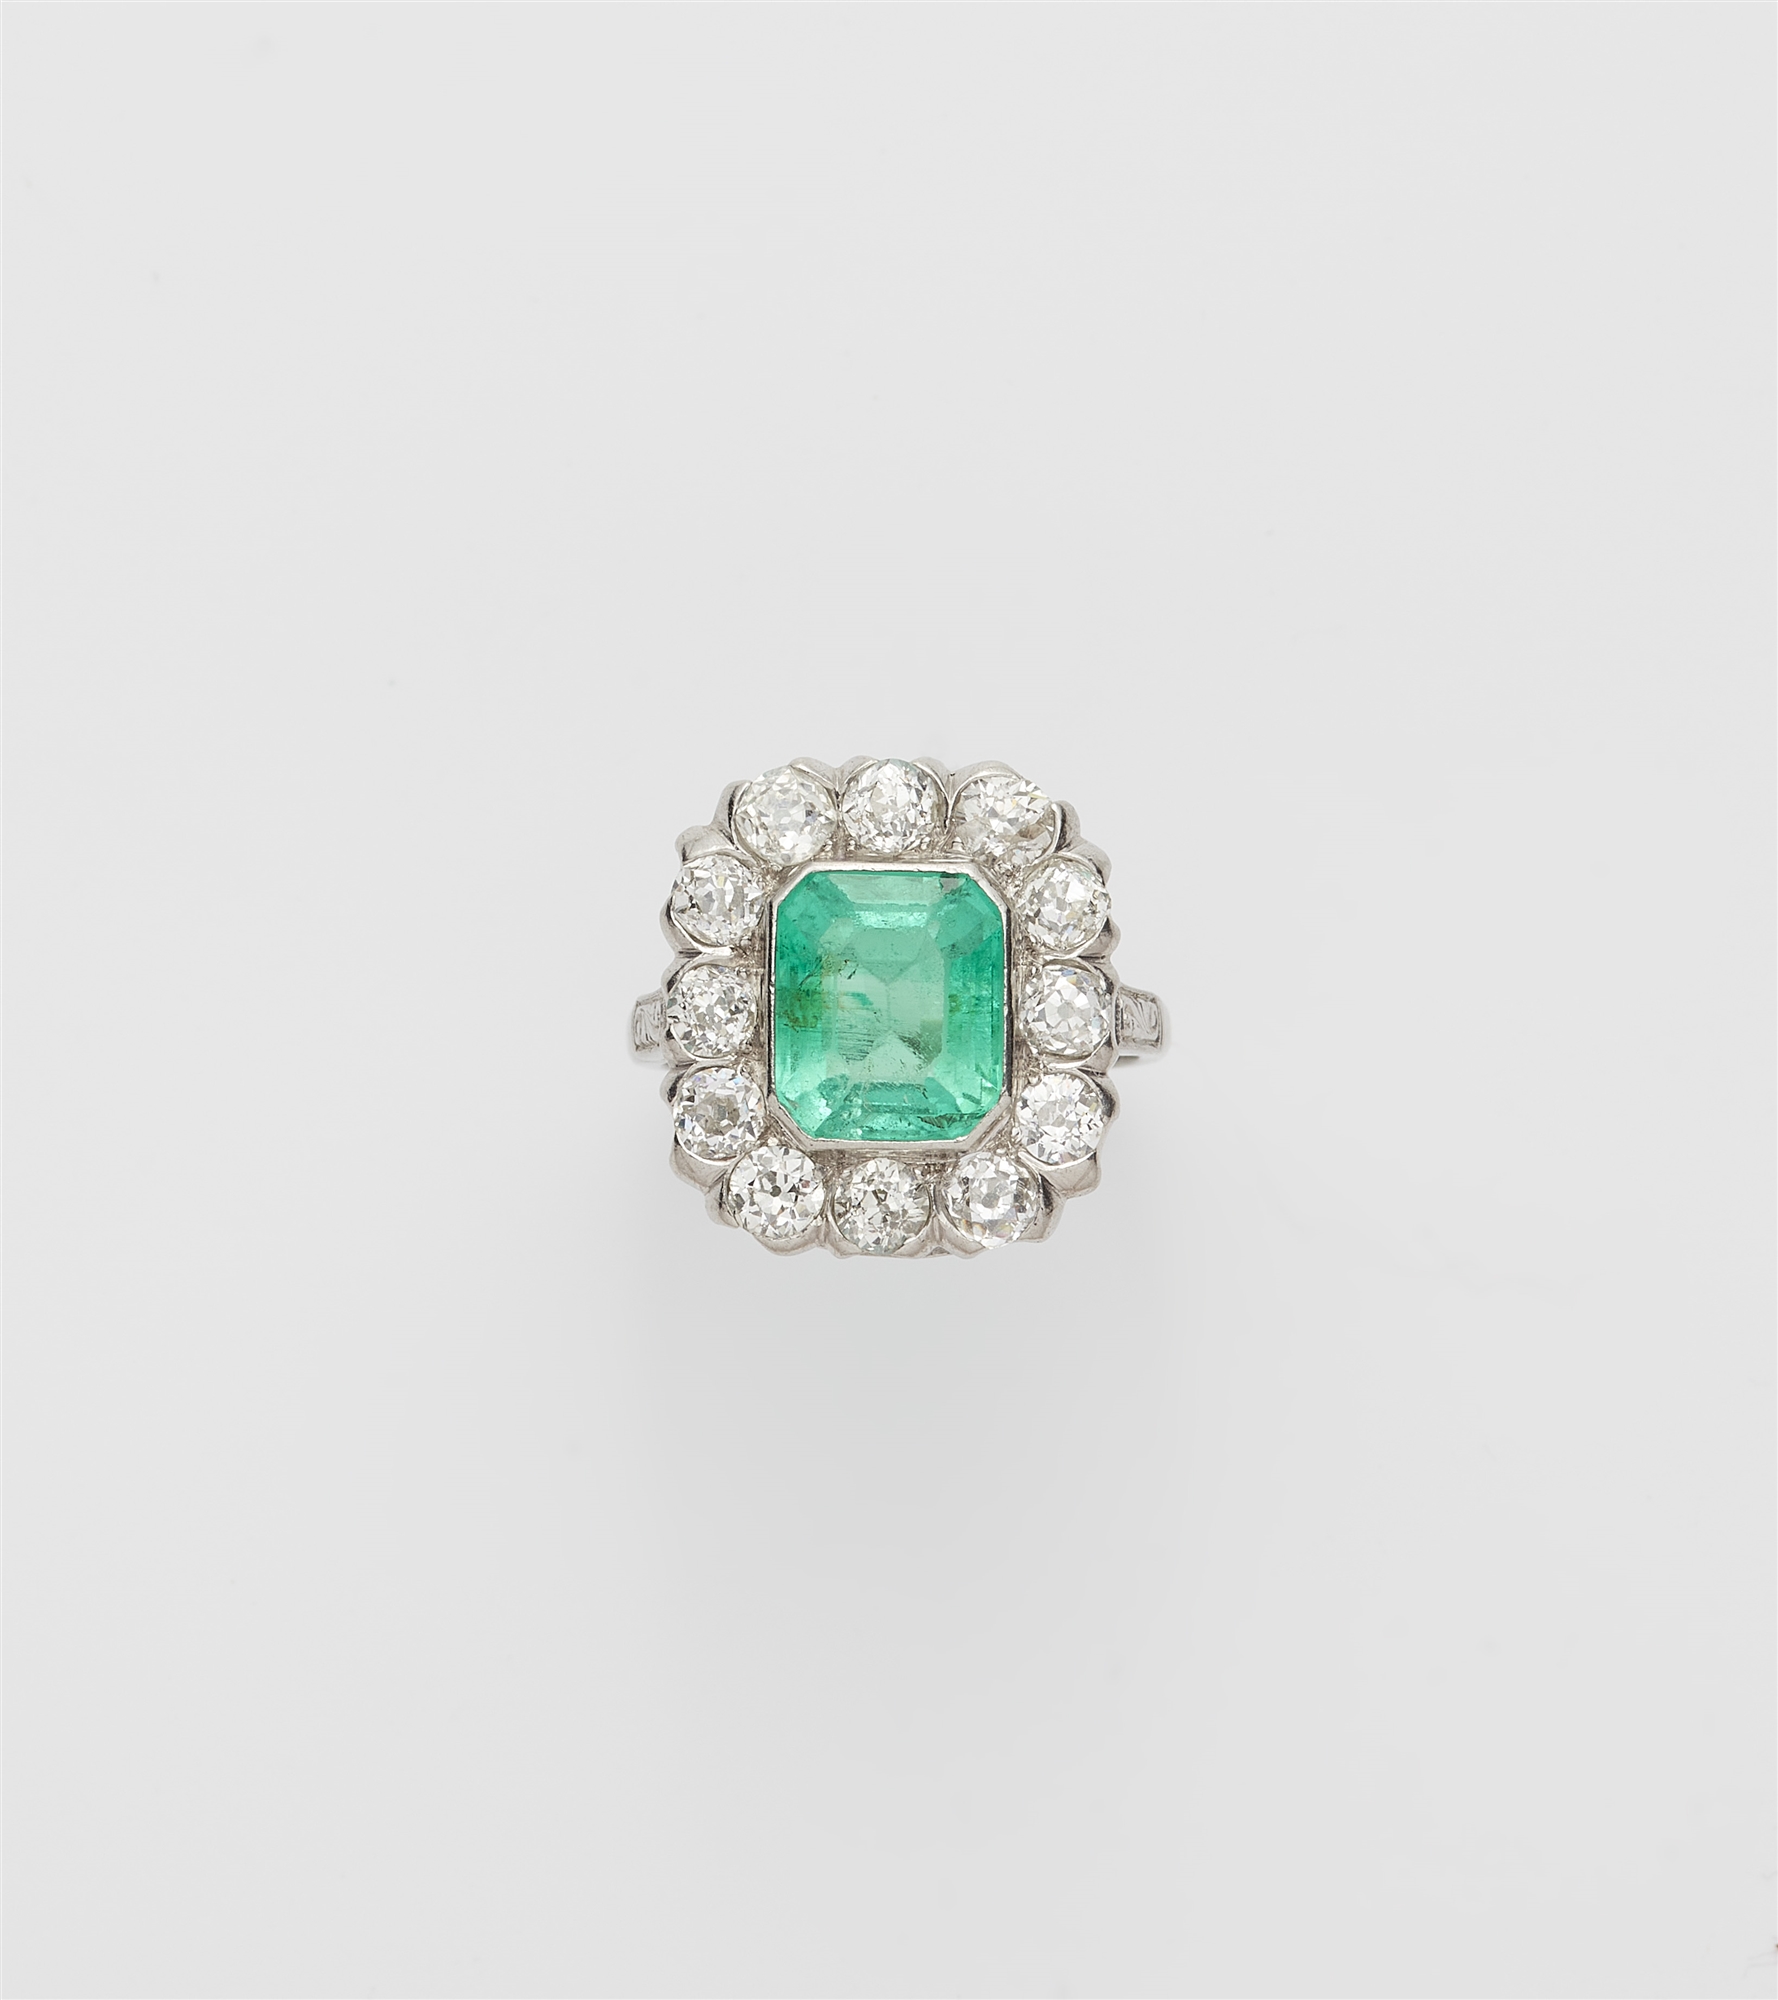 An Art Déco platinum iridium diamond and emerald cluster ring.